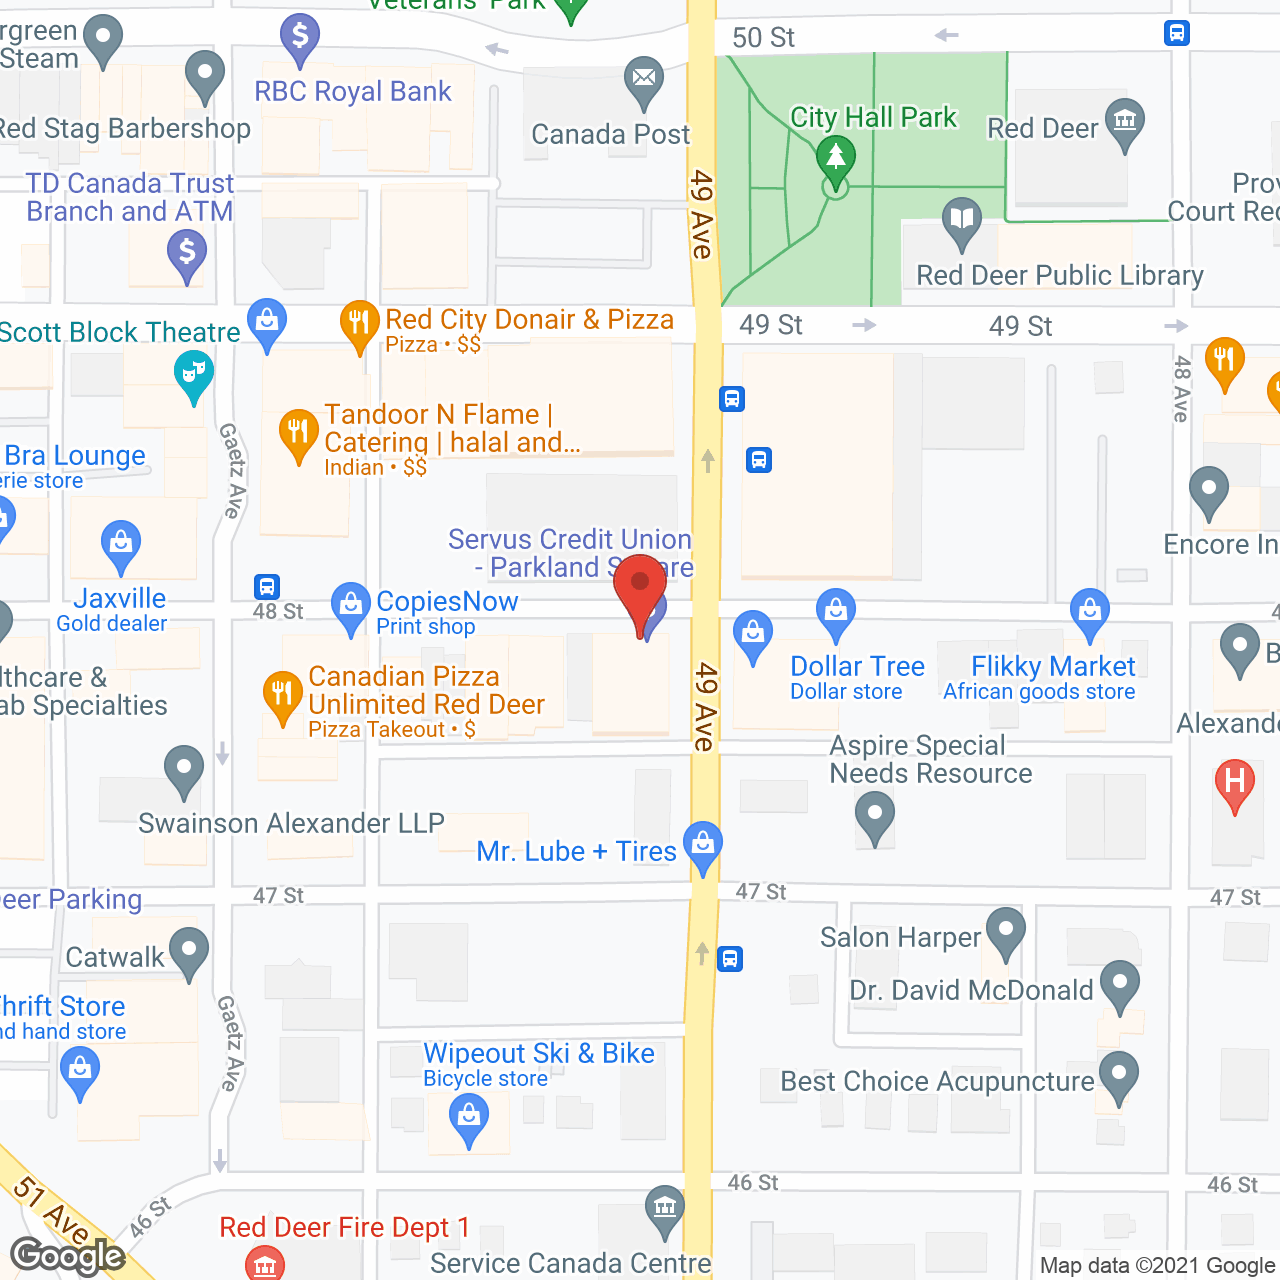 Piper Creek Foundation in google map